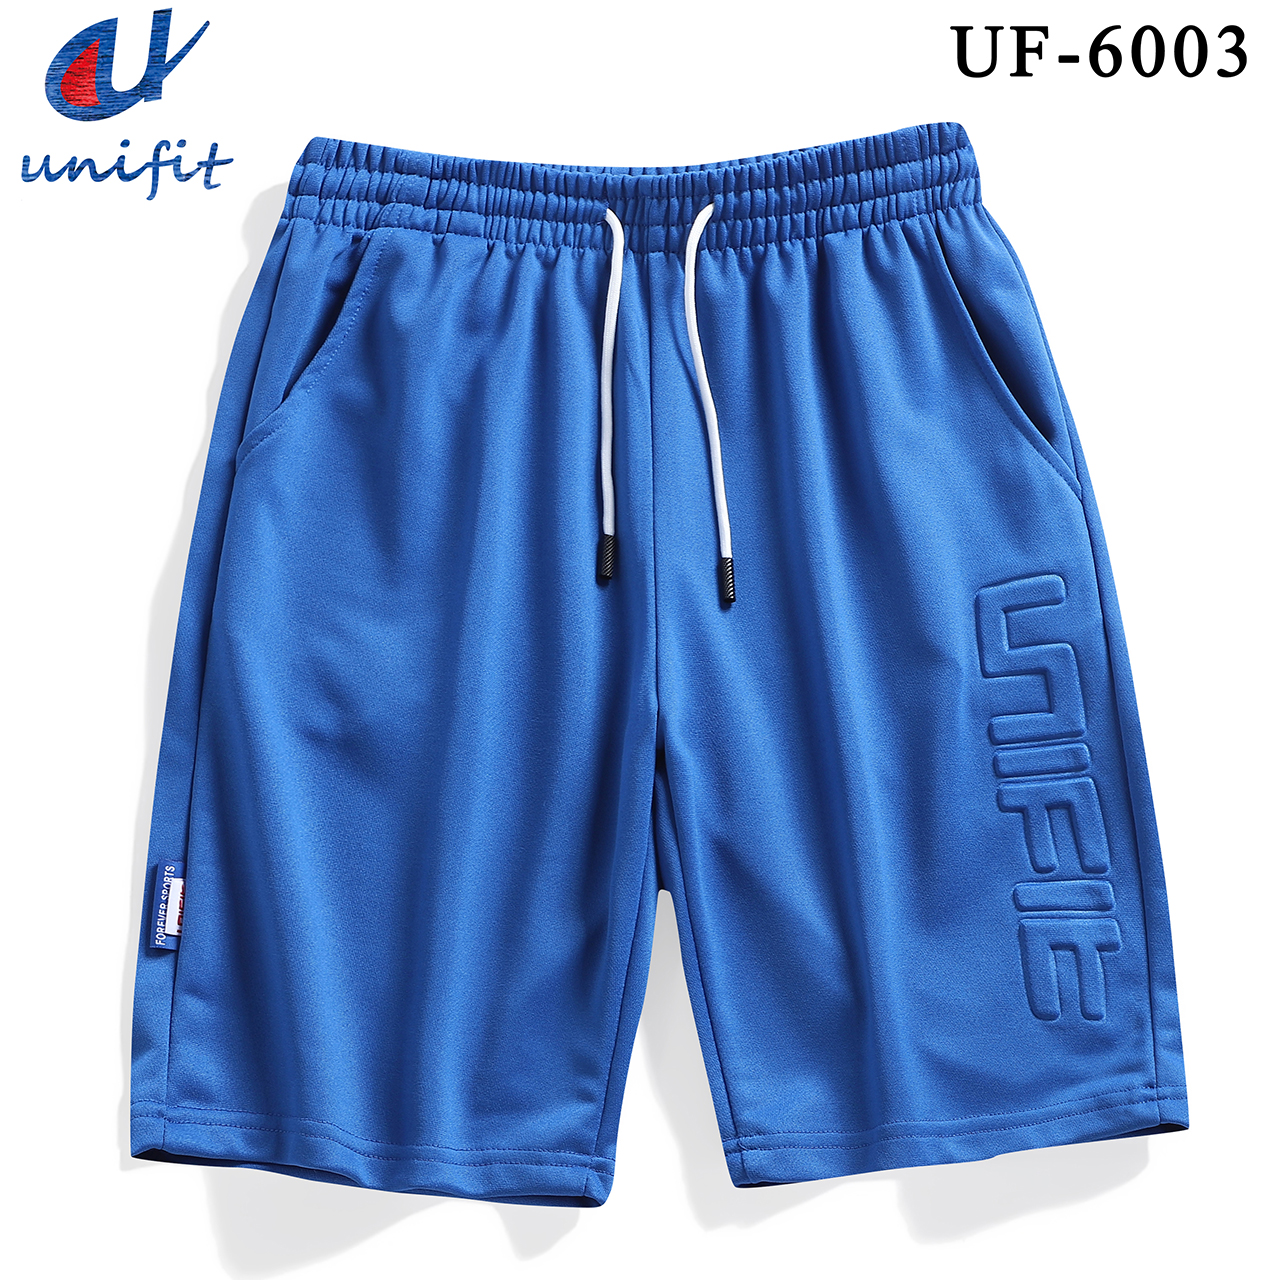 UNIFIT Men's Shorts Cotton Casual Walker Sweat Shorts UF-6003 | Lazada PH